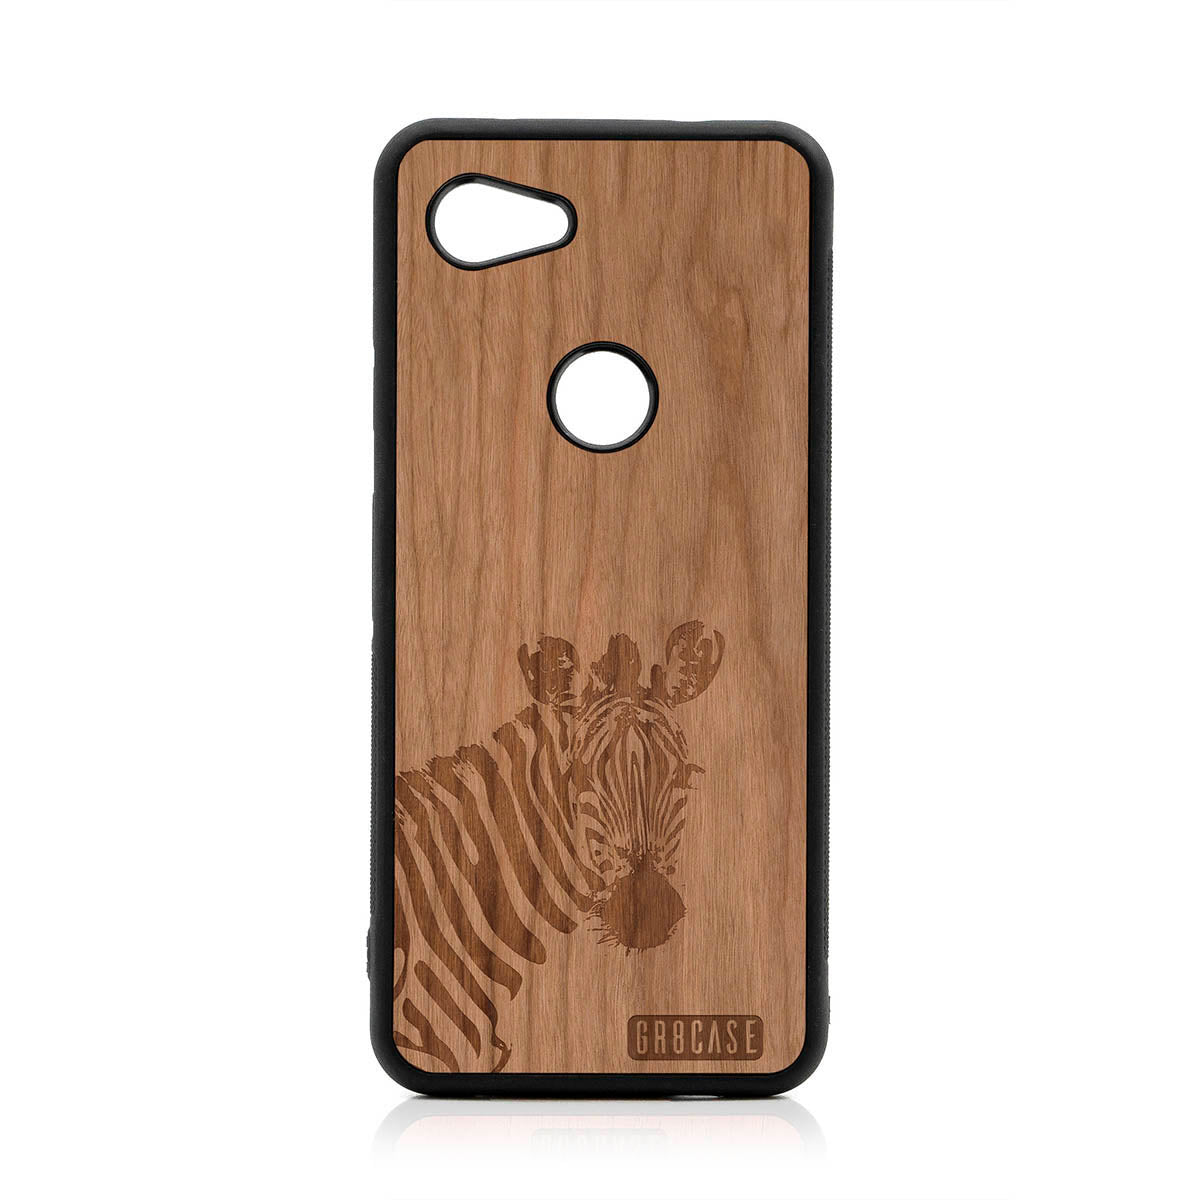 Lookout Zebra Design Wood Case For Google Pixel 3A XL